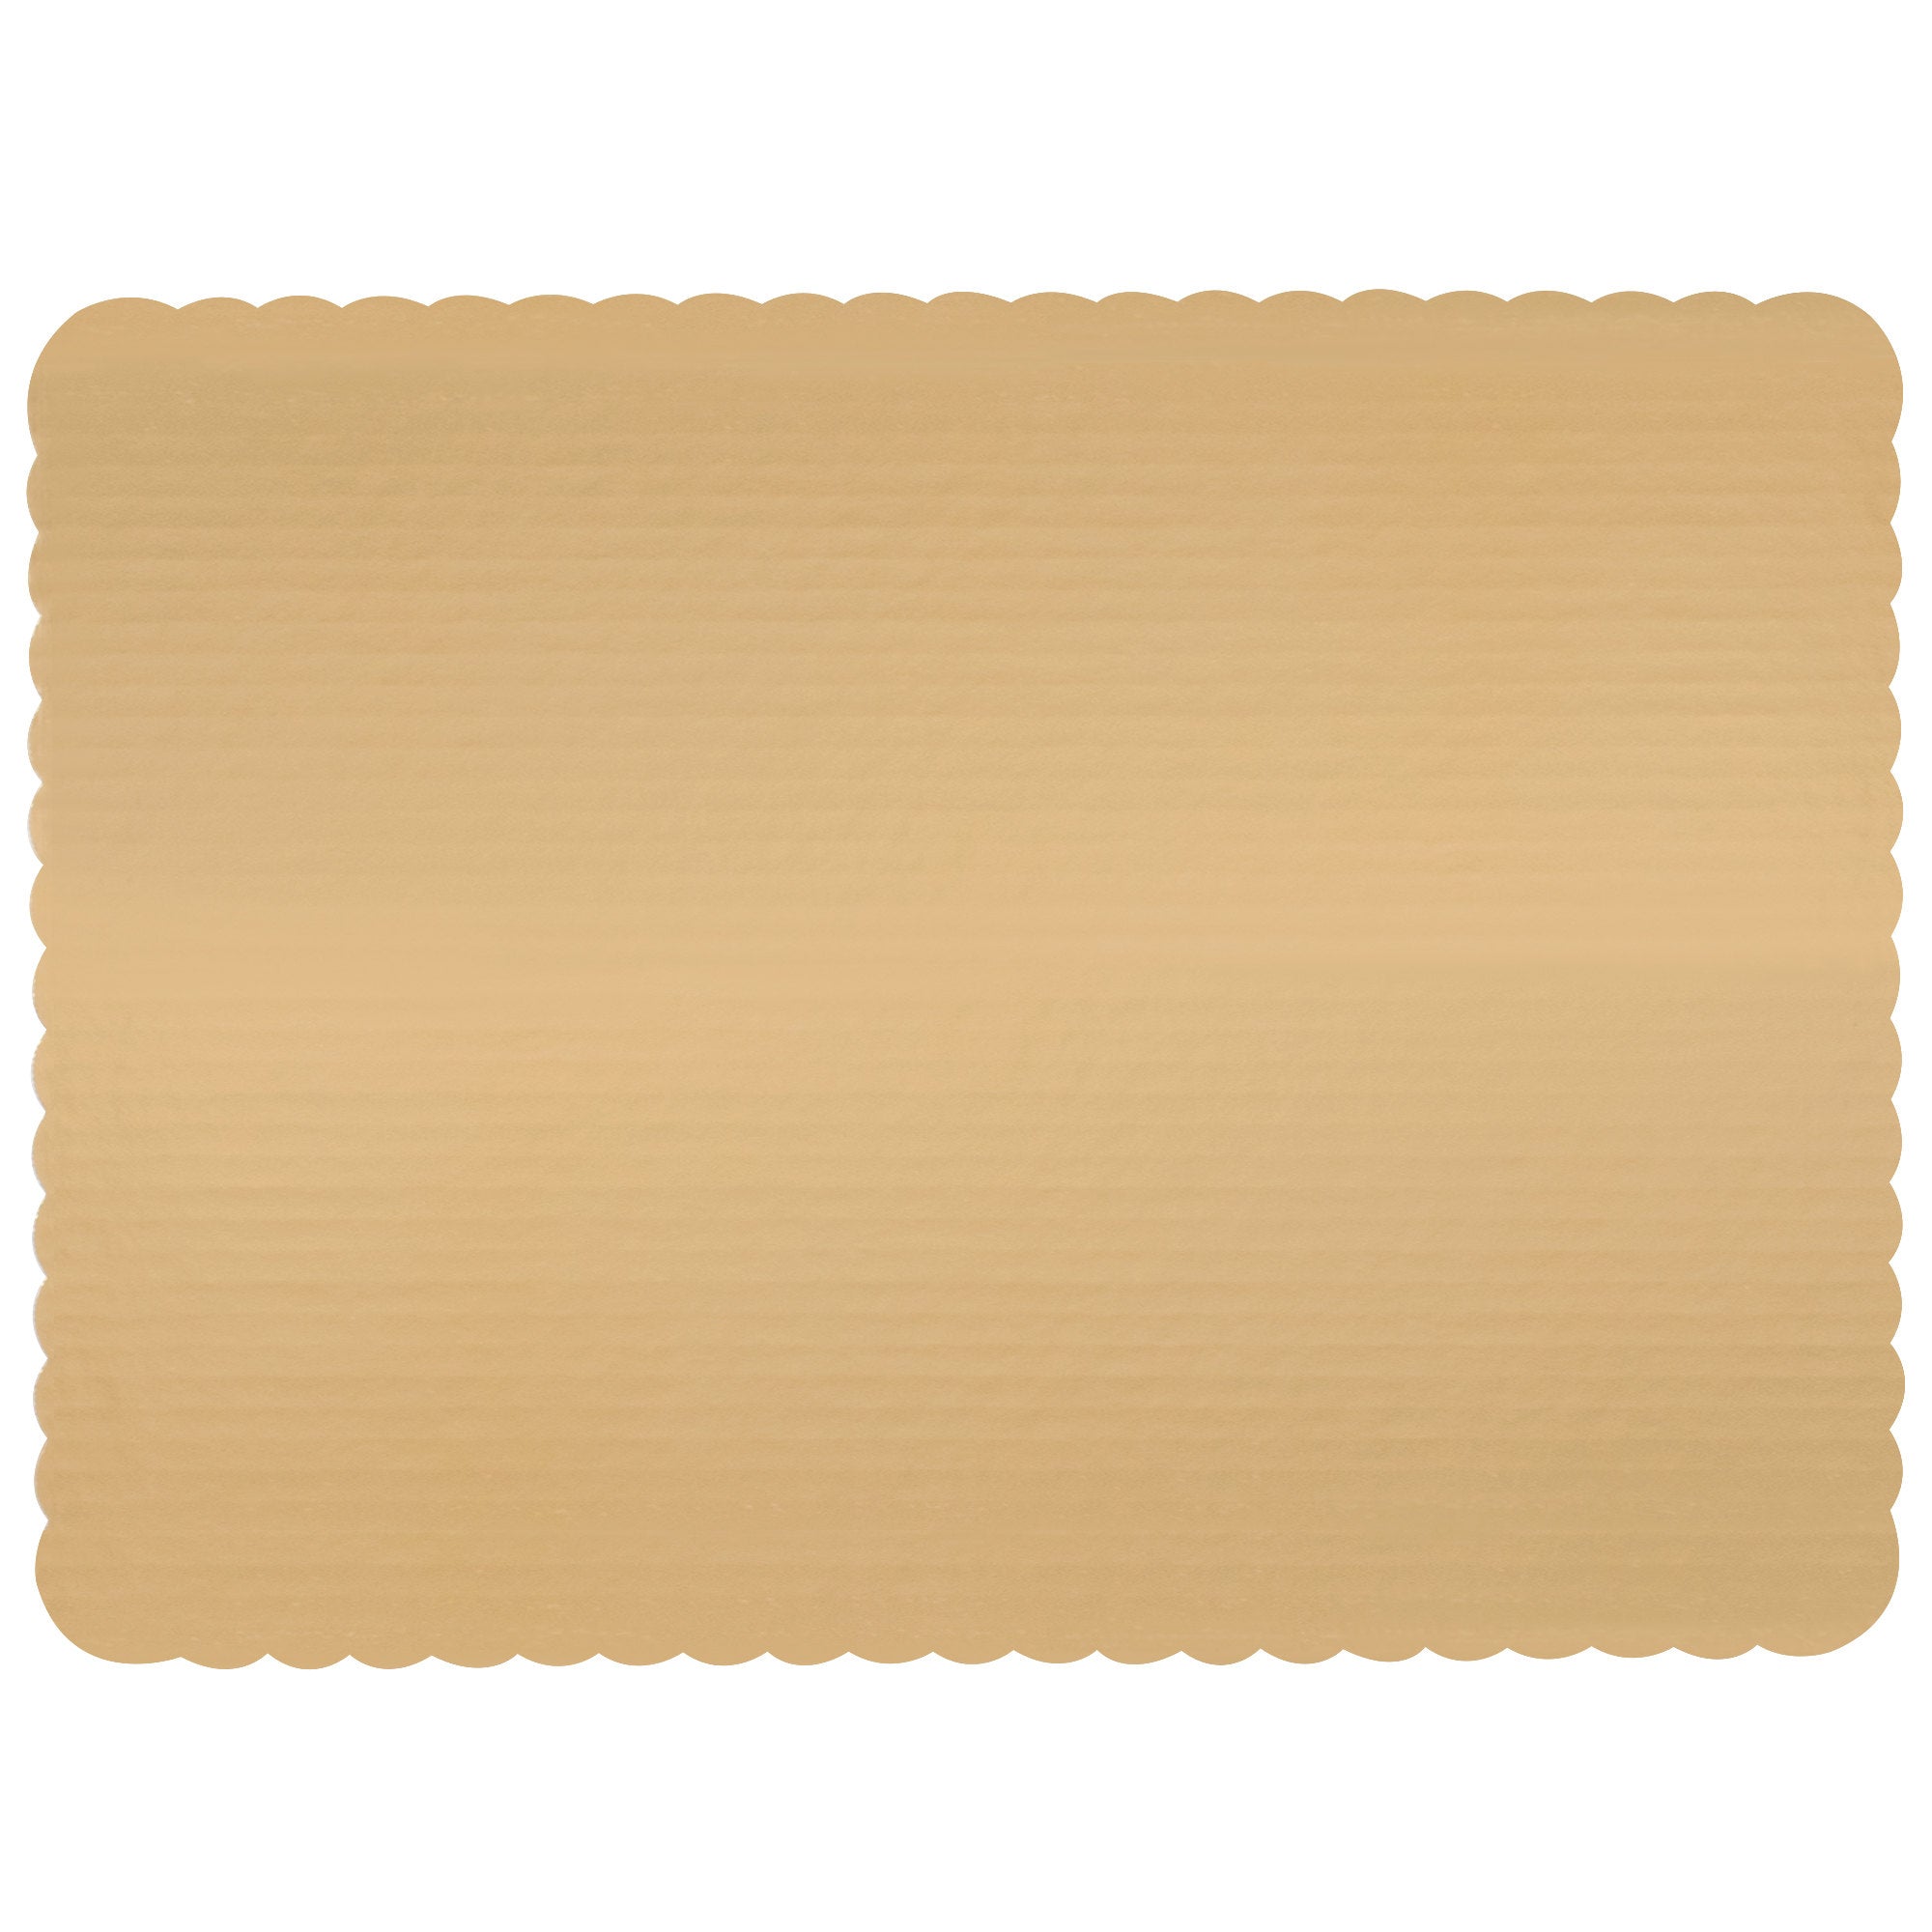 18 3/4" x 13 3/4" Gold Laminated Rectangular Corrugated 1/2 Sheet Cake Pad